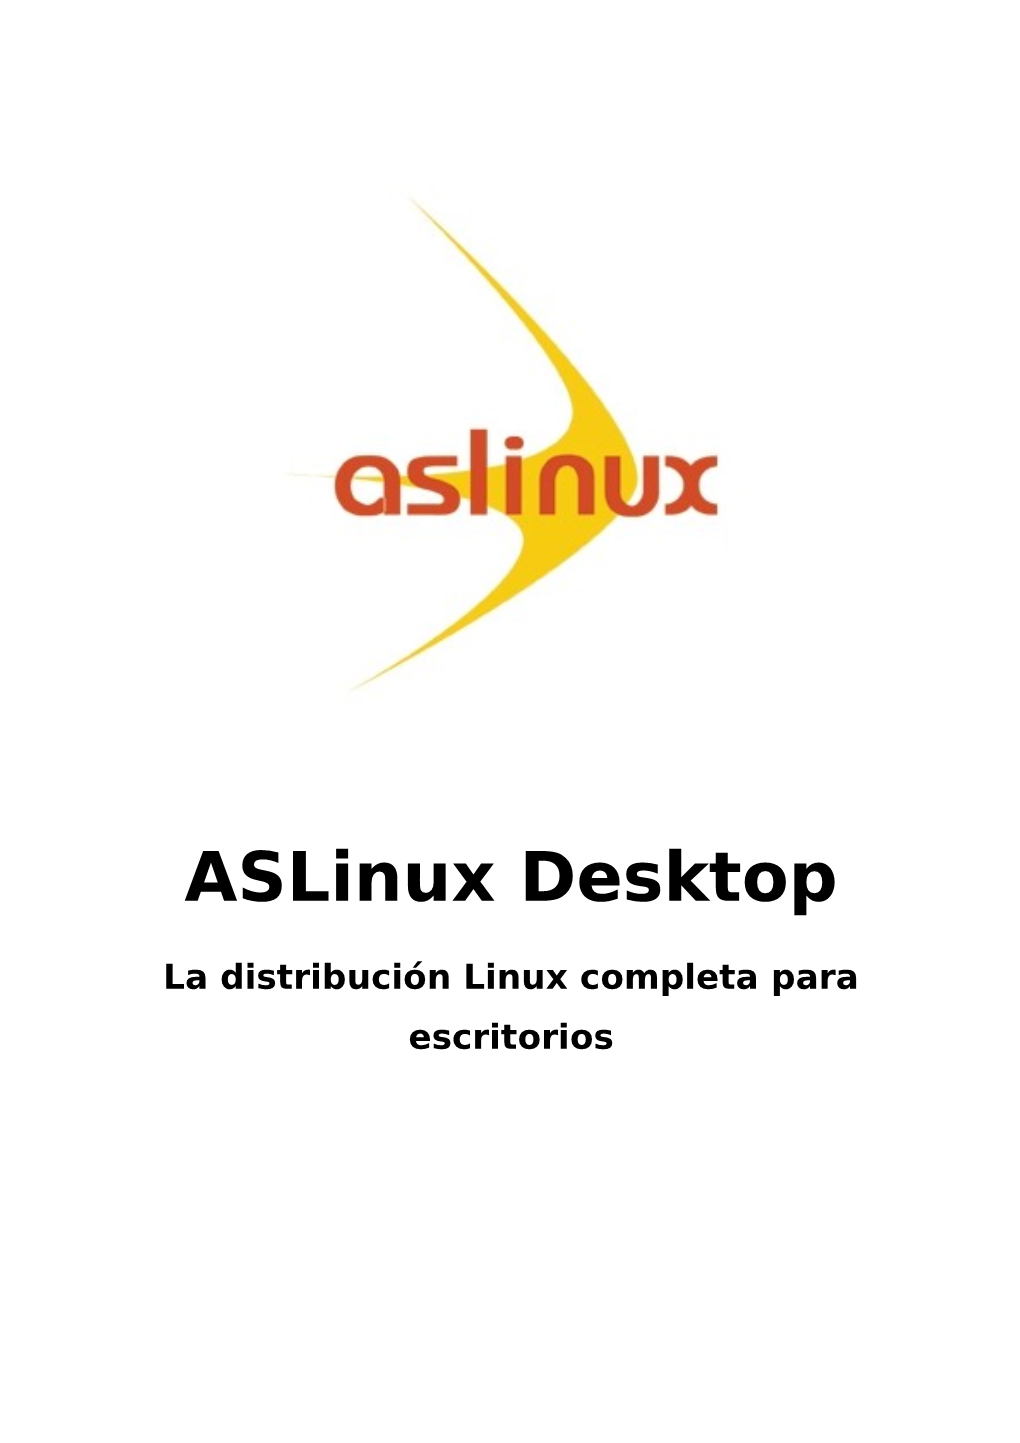 Aslinux Desktop